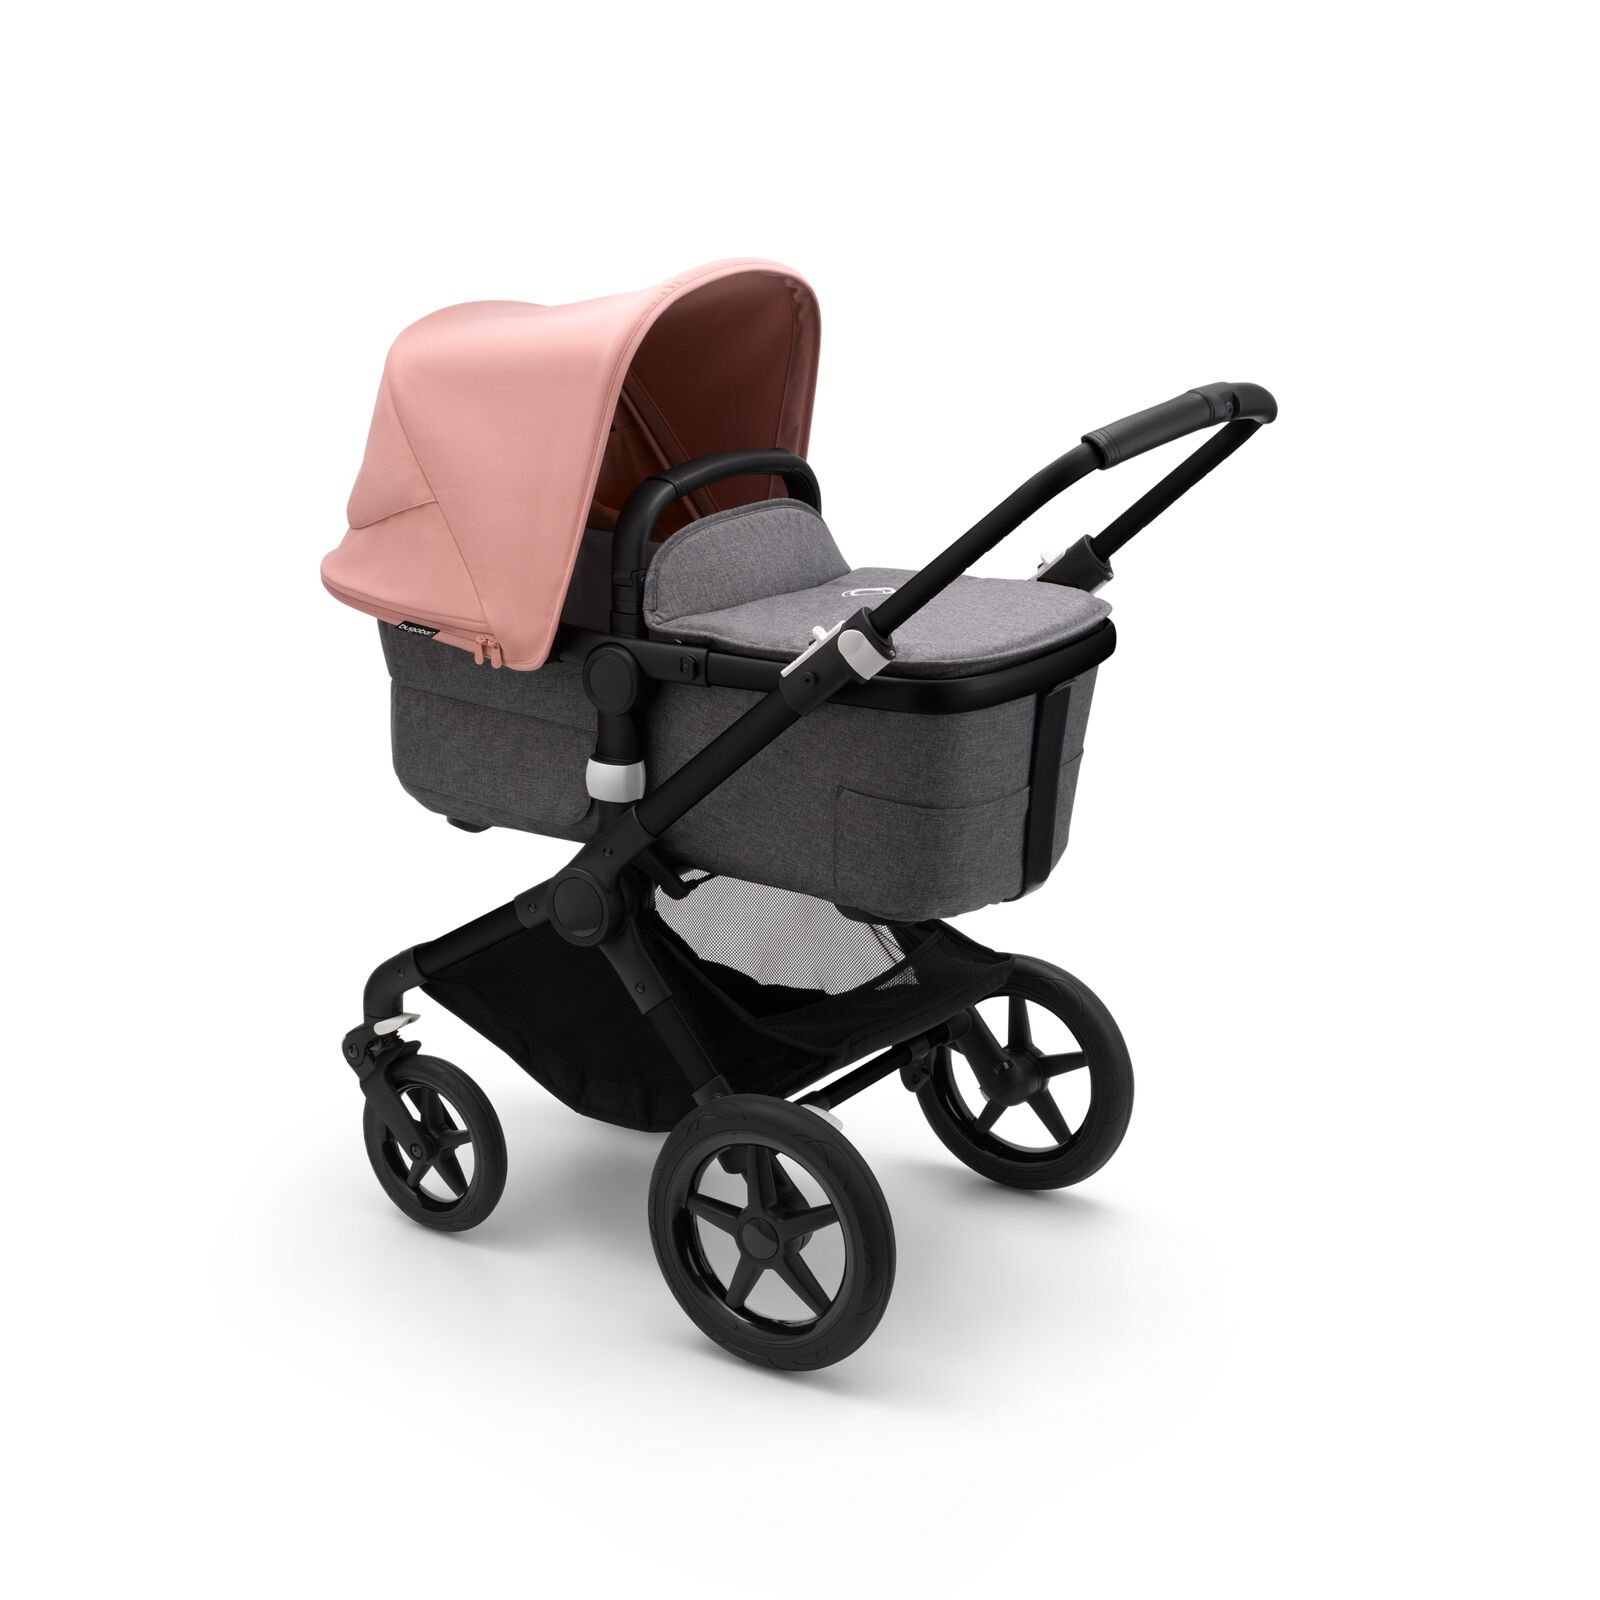 Bugaboo Fox 3 bassinet stroller with black frame, grey fabrics, and pink sun canopy.